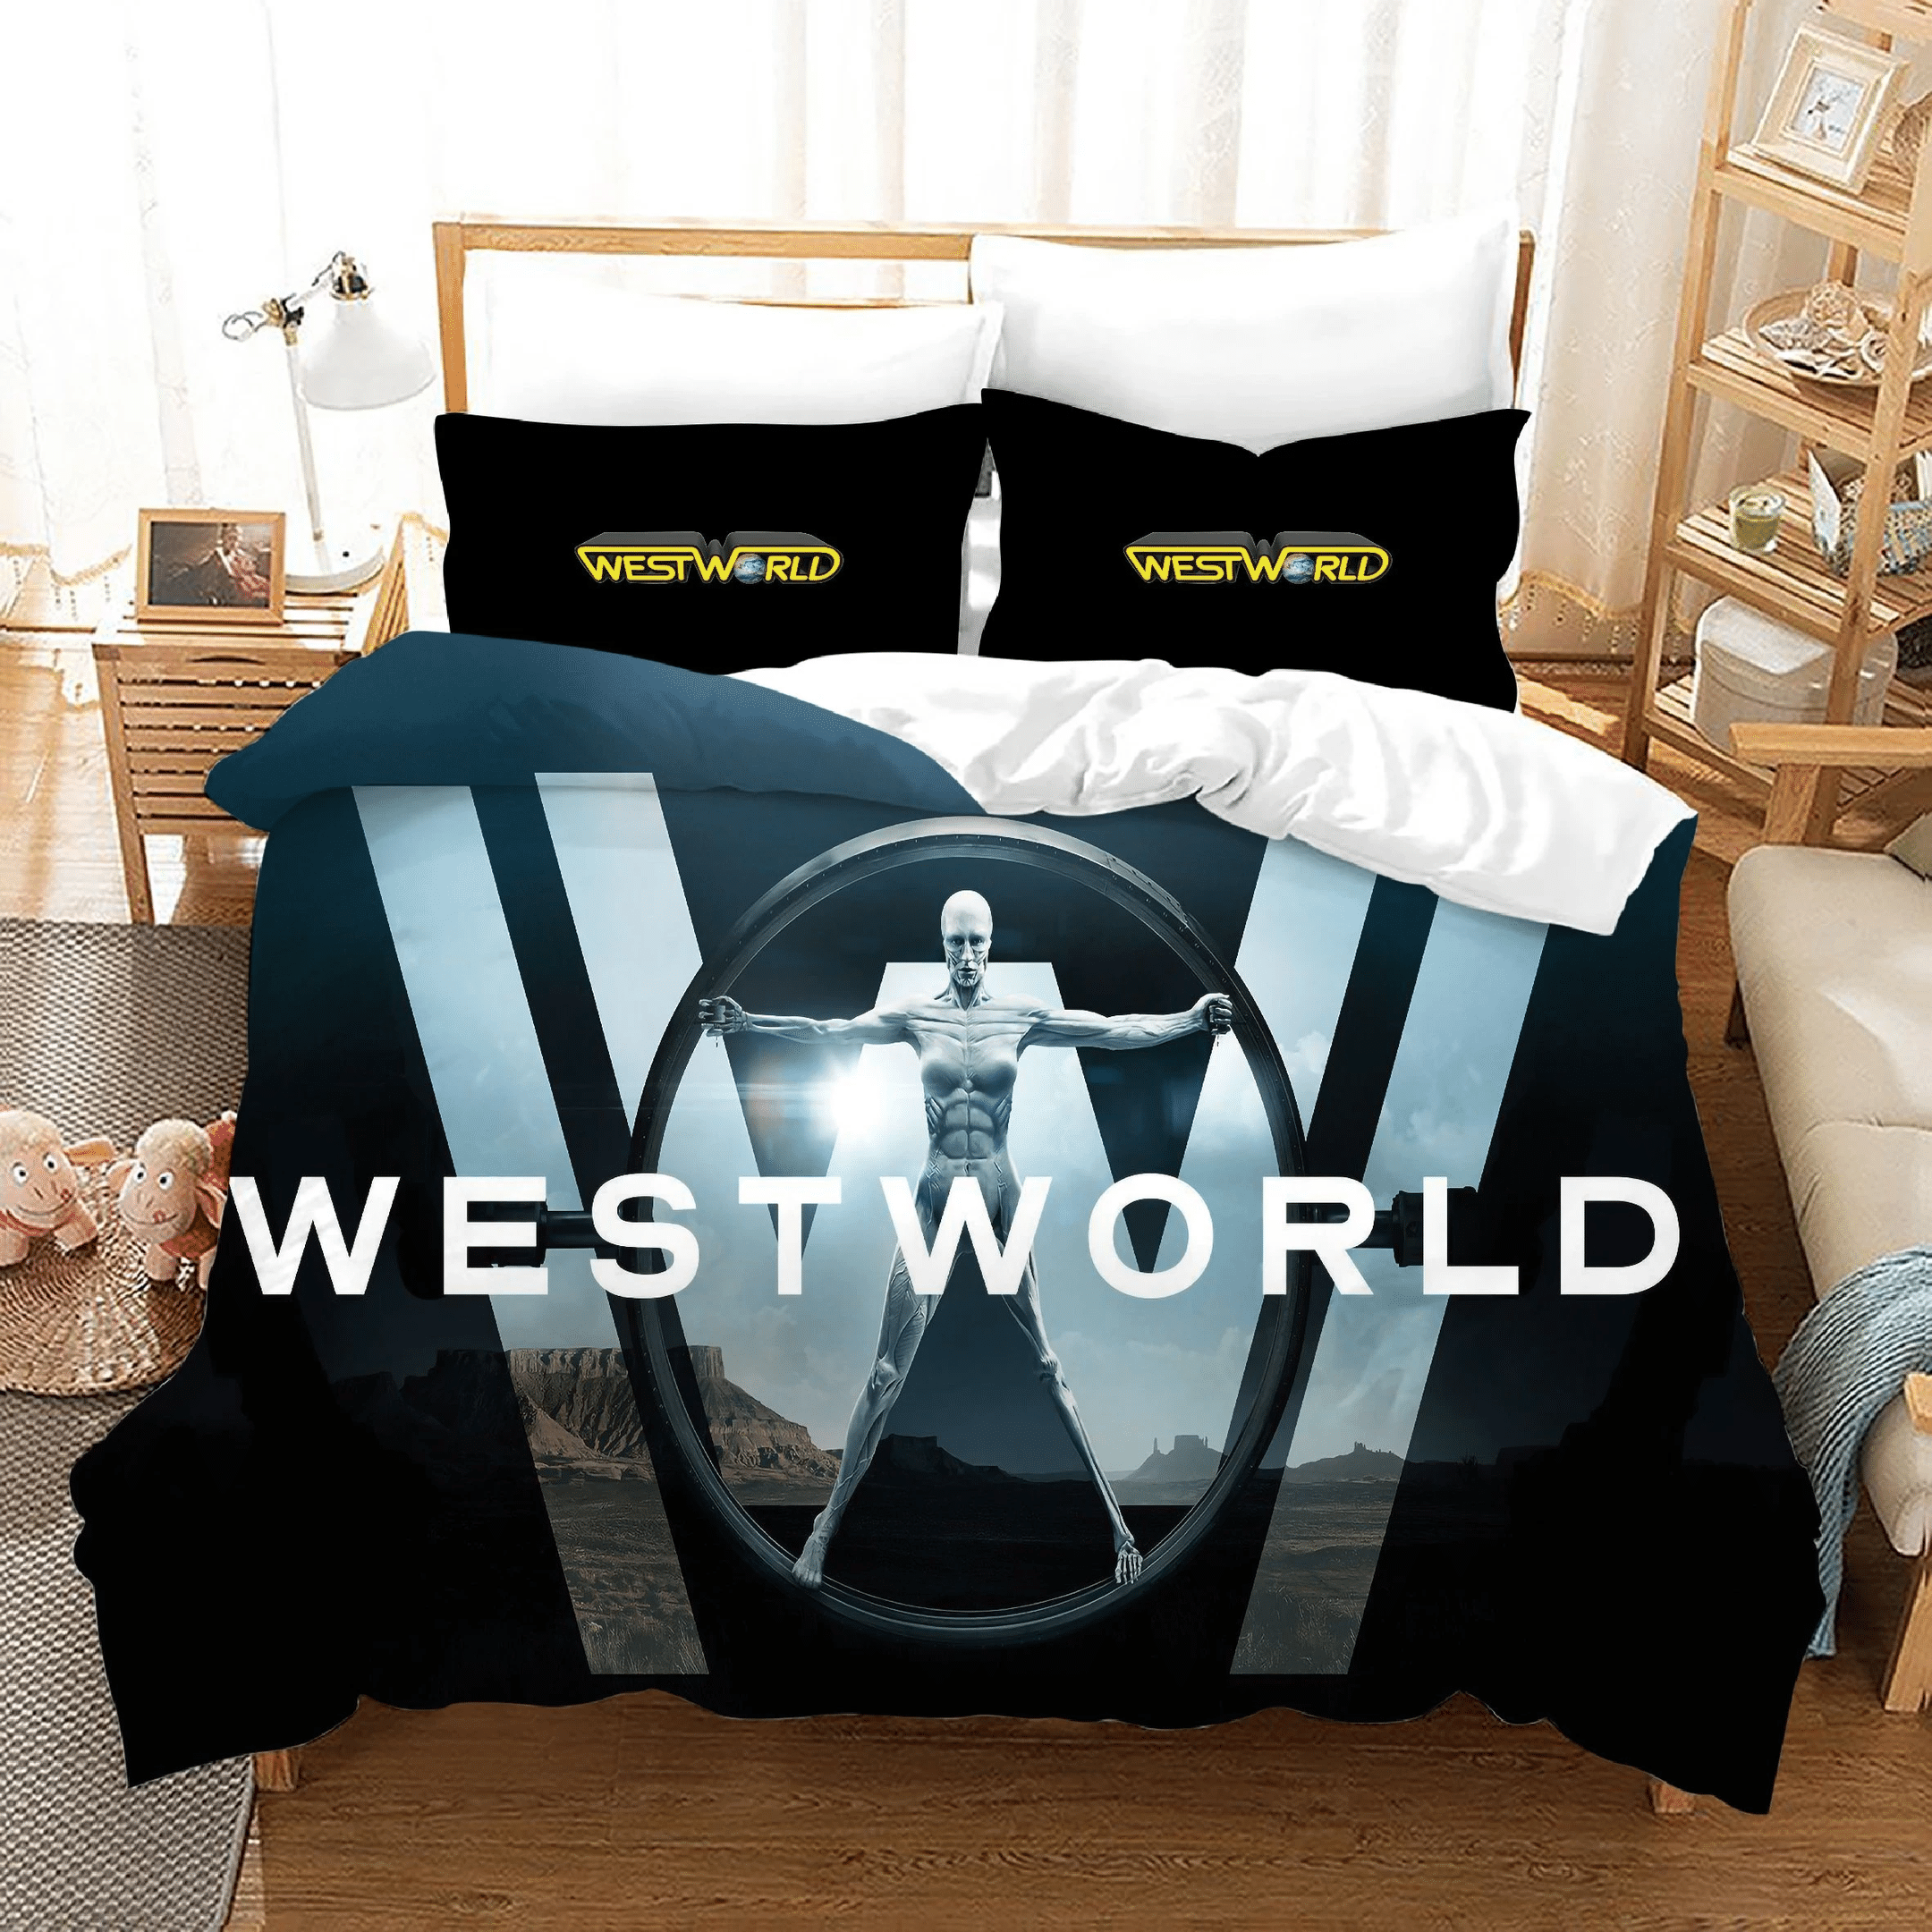 Westworld 1 Duvet Cover Quilt Cover Pillowcase Bedding Sets Bed